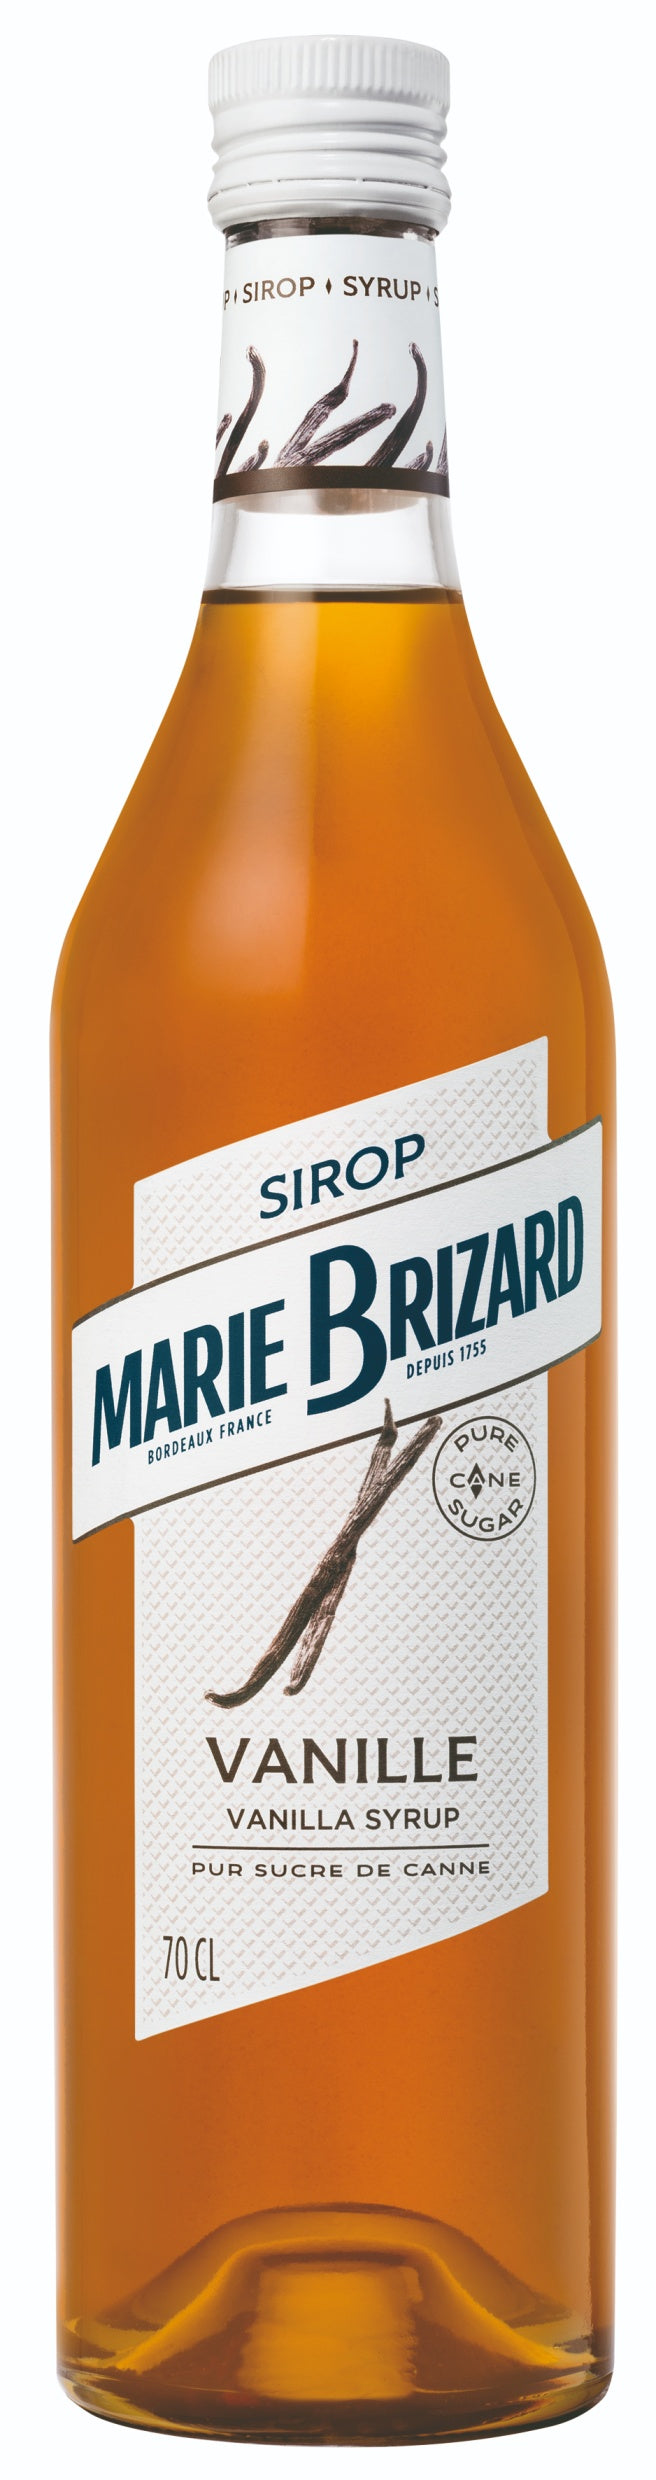 MARIE BRIZARD SIROP VANILLE 70CL